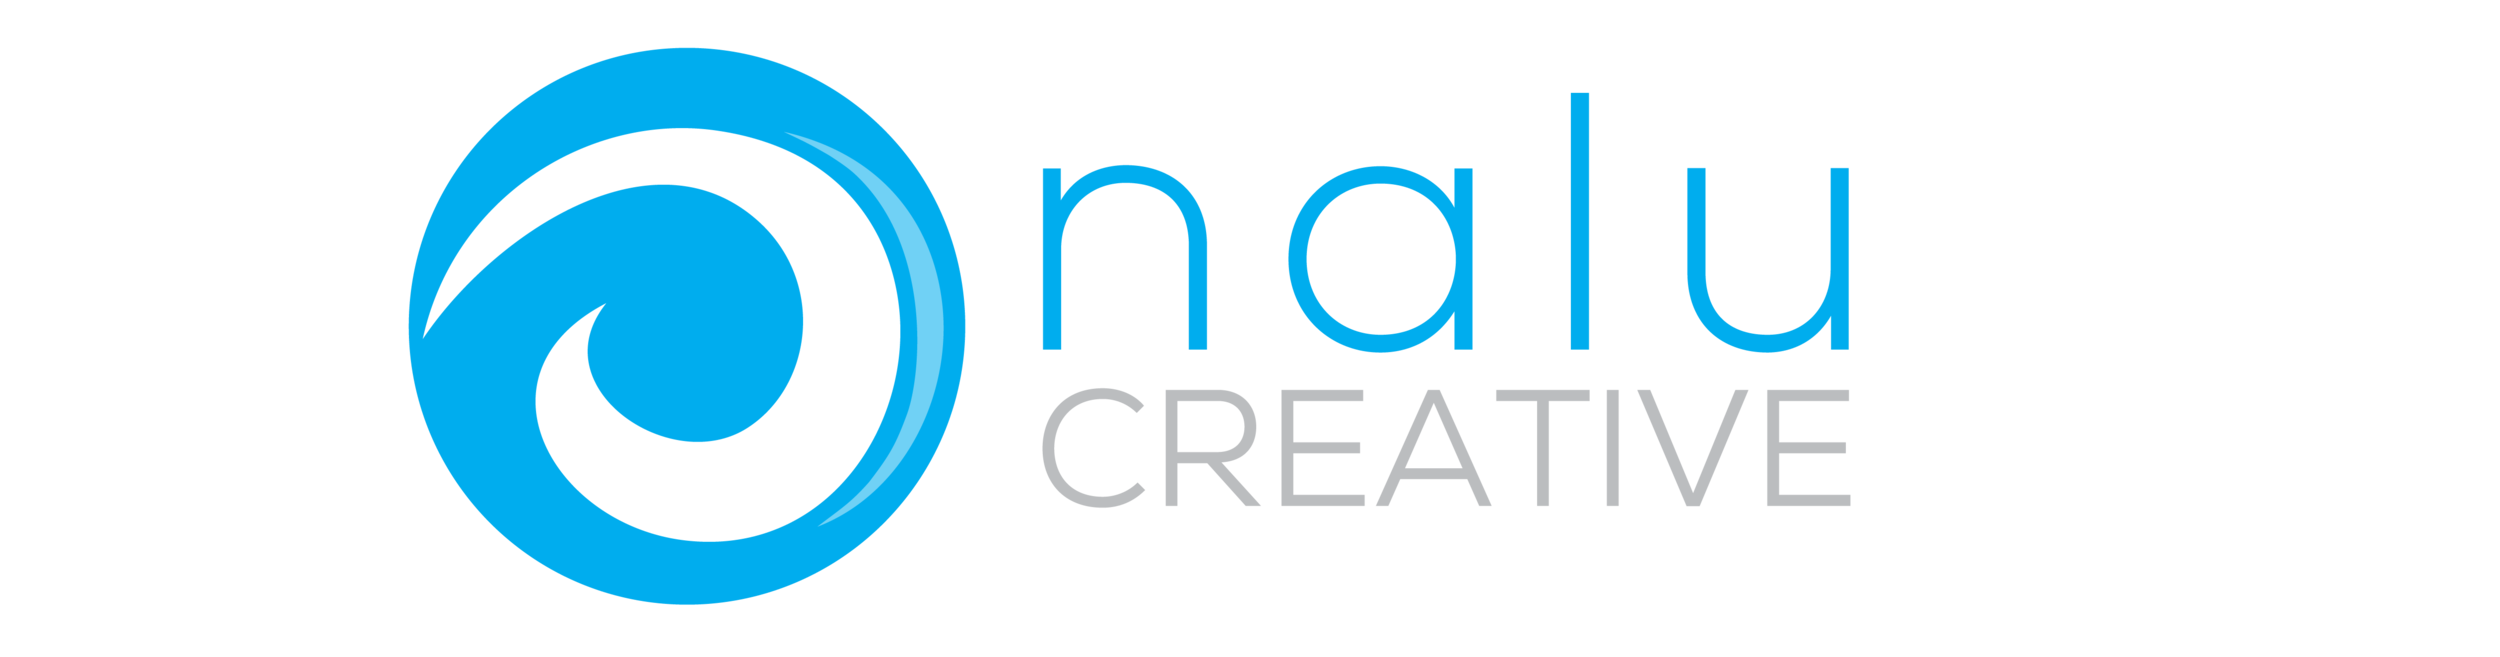 nalu creative | we create momentum